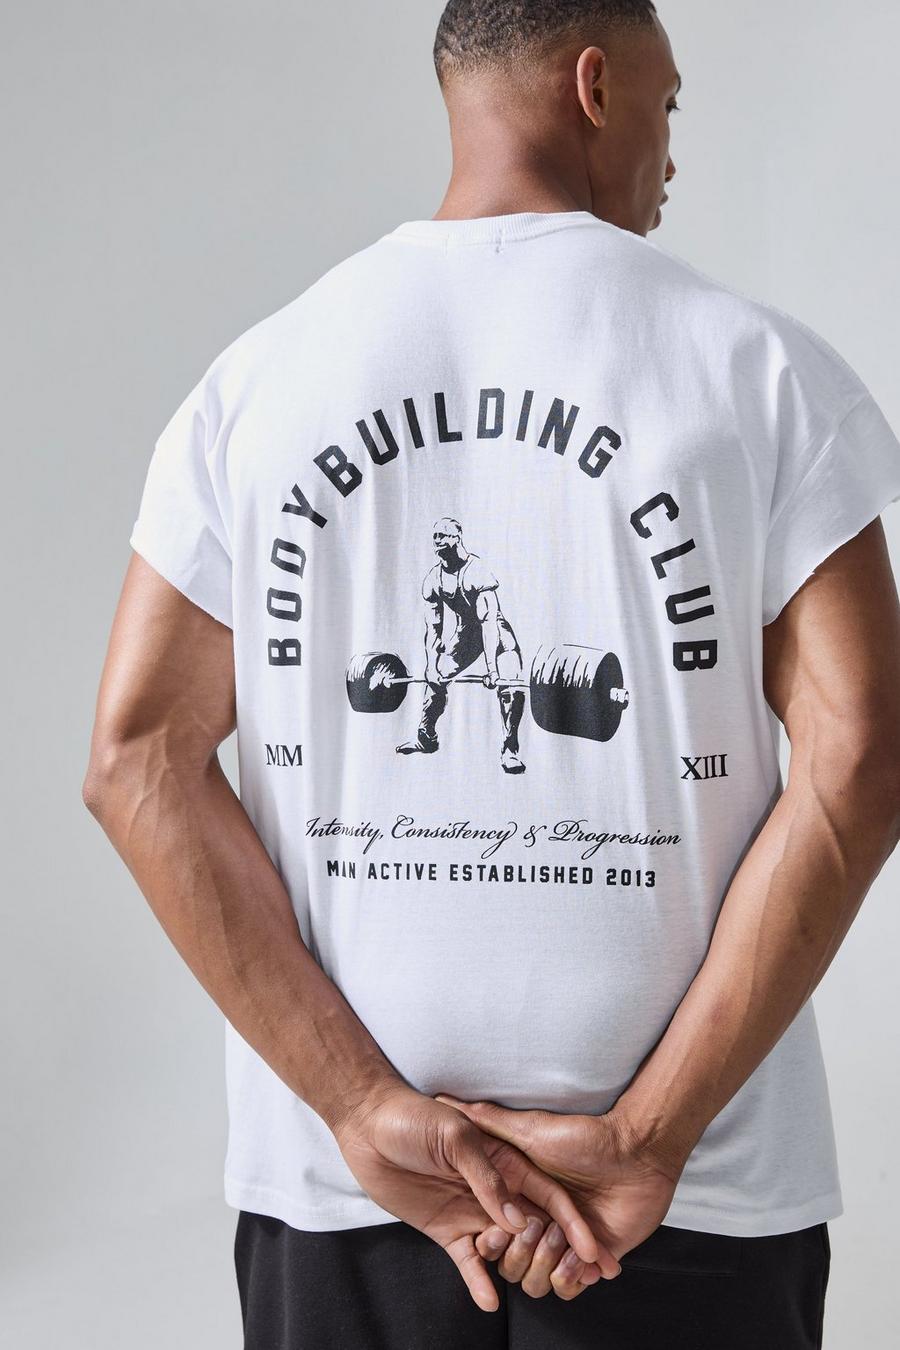 Man Active Oversize Bodybuilding T-Shirt, White